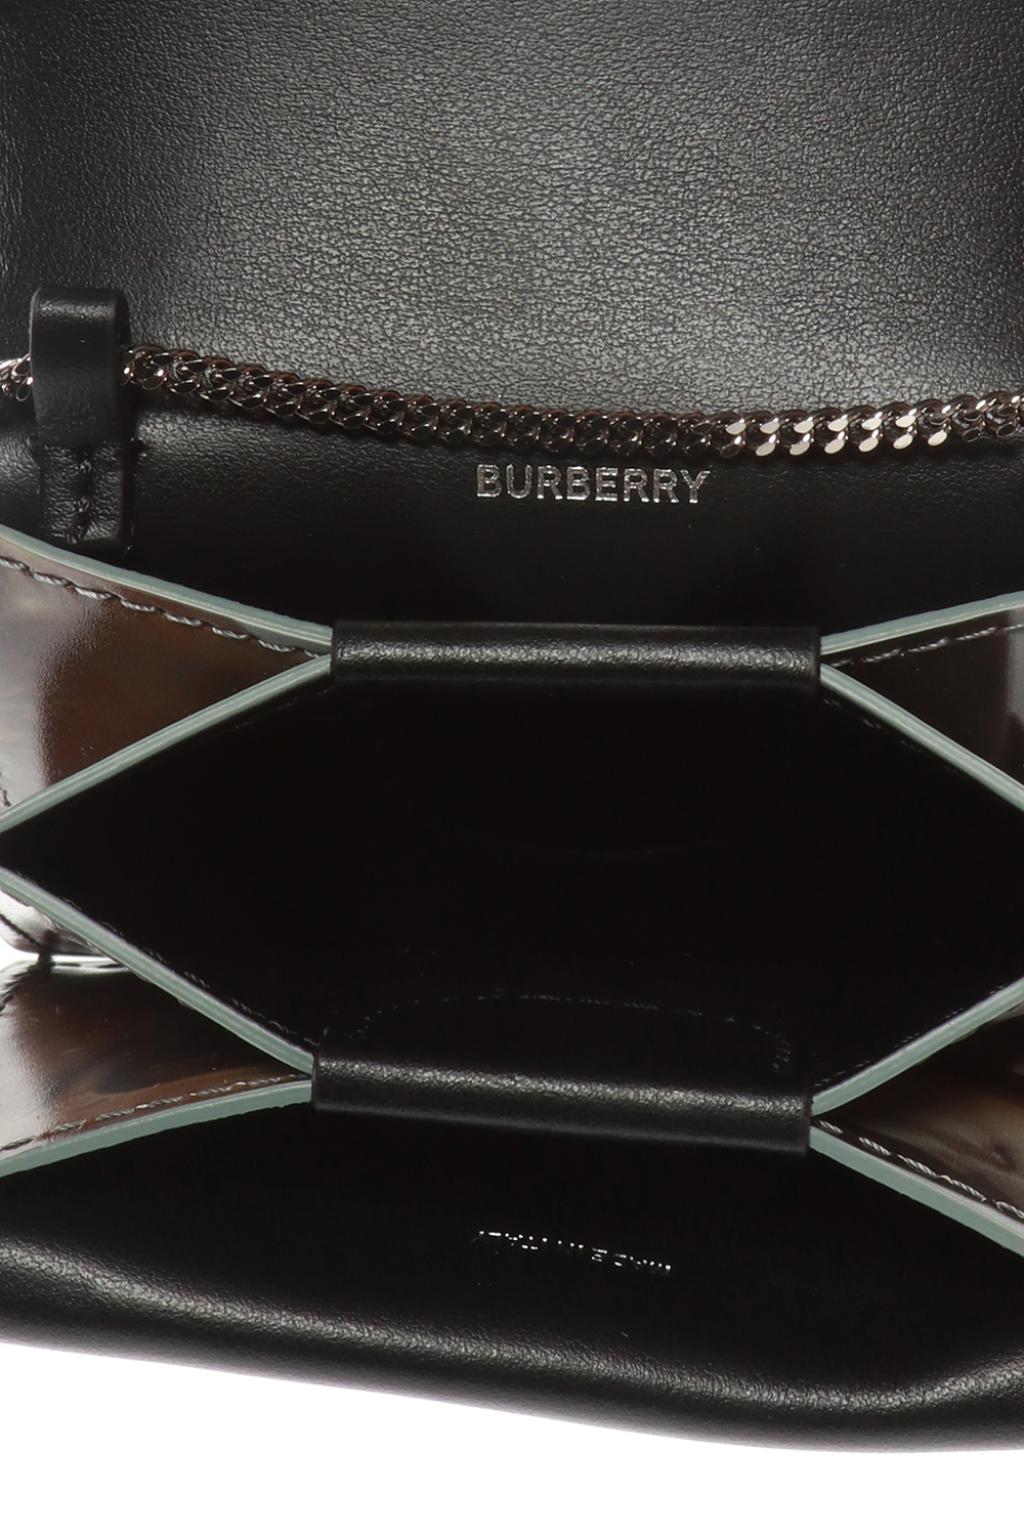 Burberry Card case on chain, Красивое платьице burberry